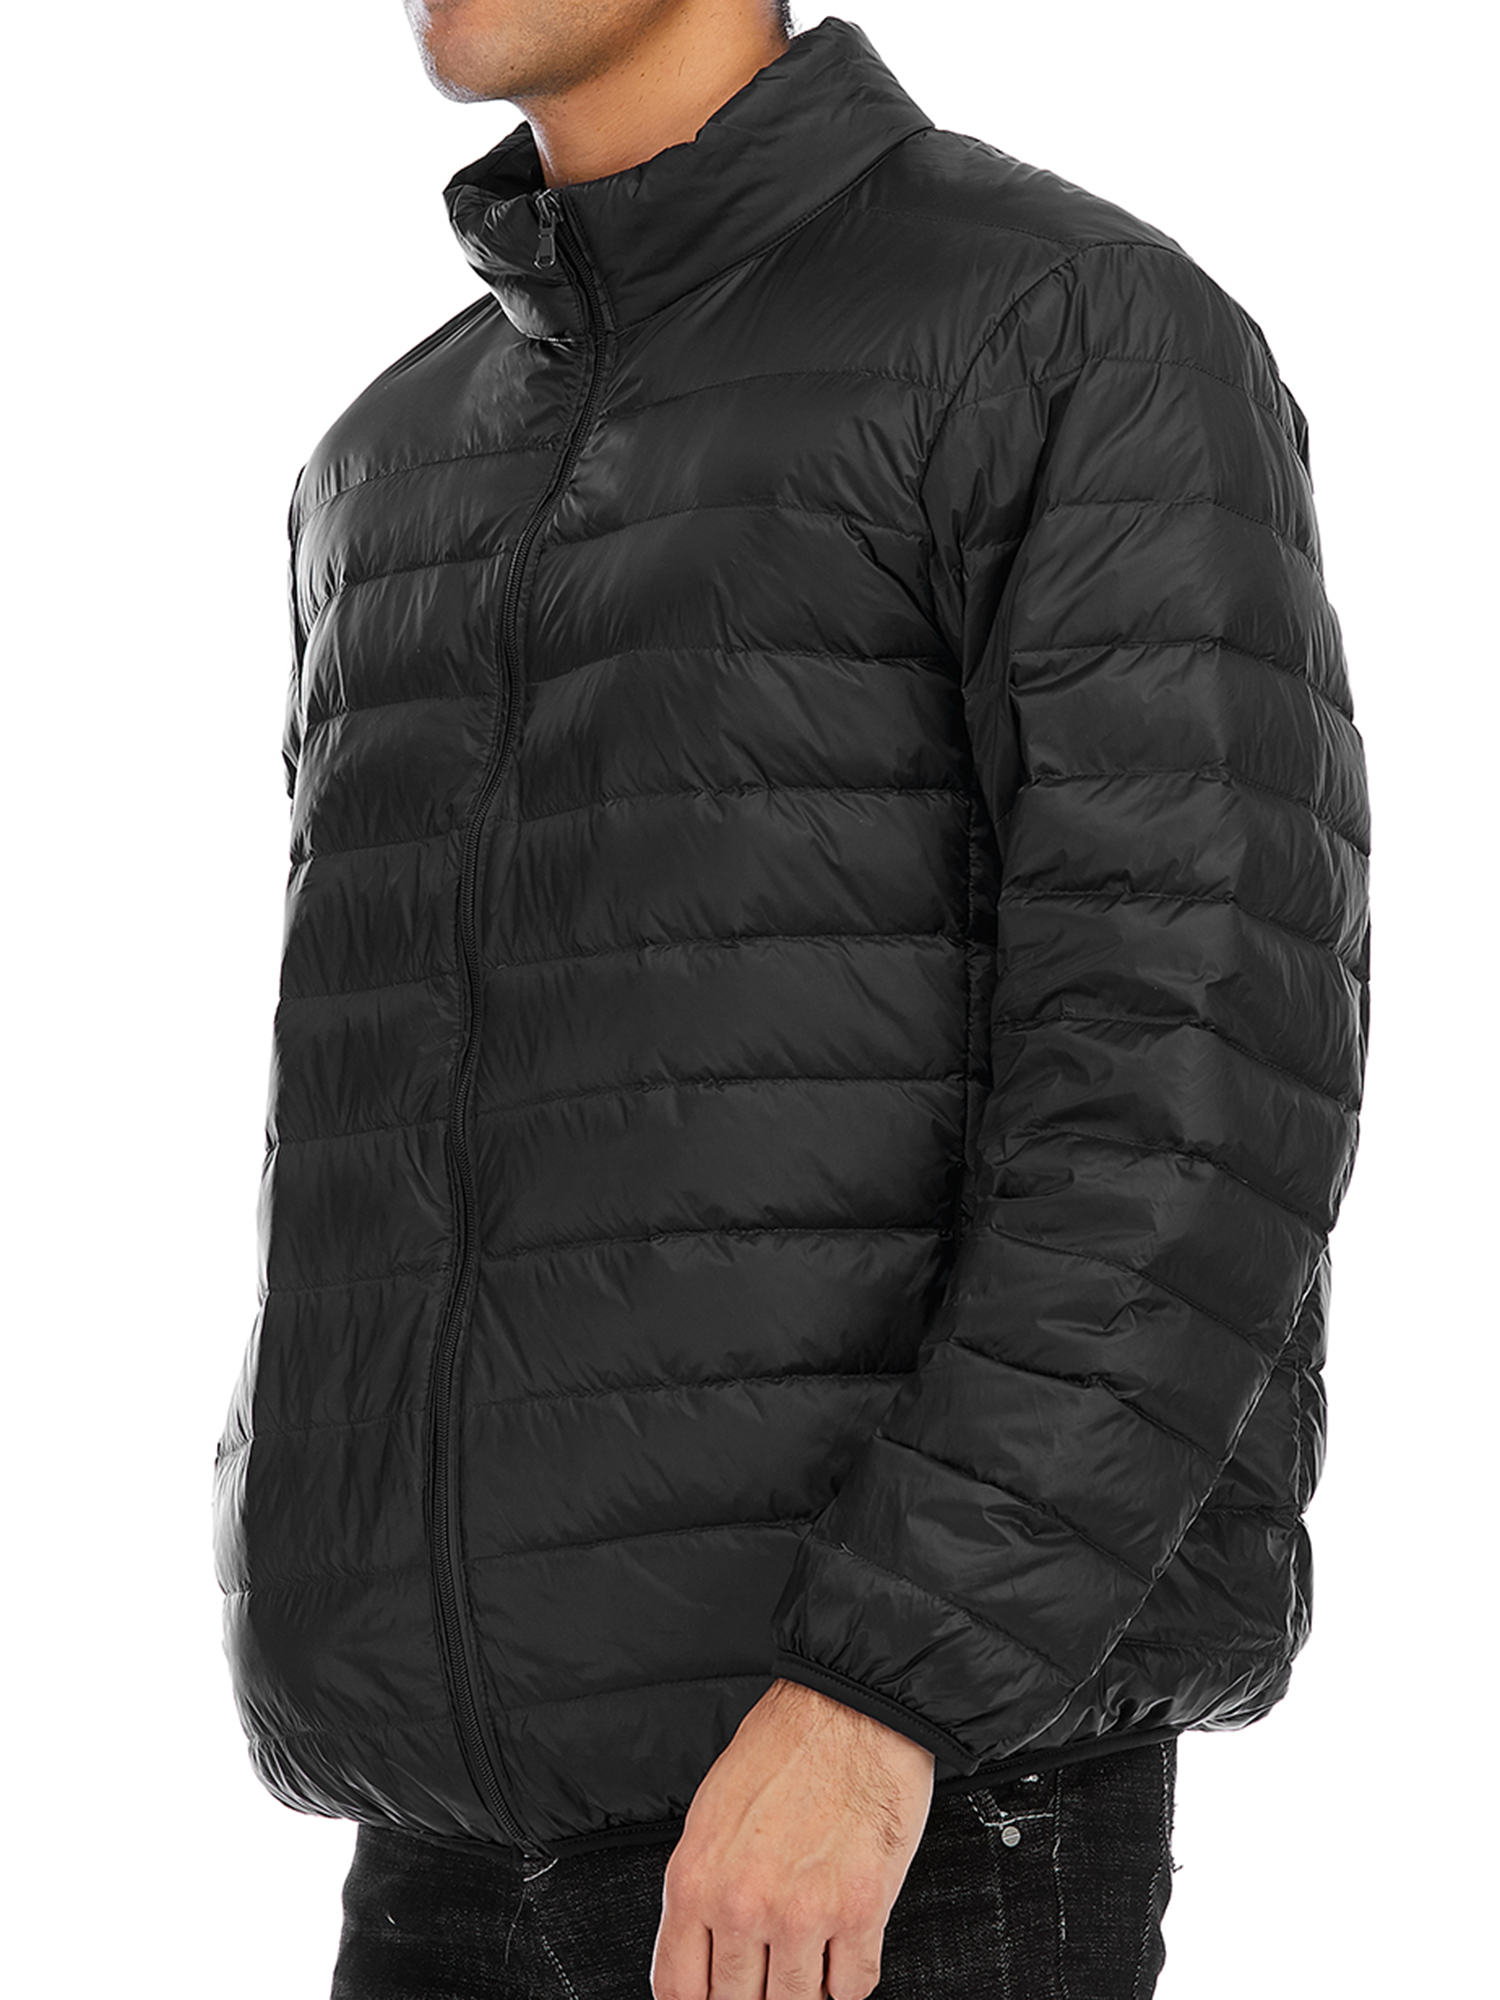 Mens Down Jacket Casual Zip Up Windbreaker Jackets Outdoor Coat Winter Jackets Lightweight Down Jacket Men Boys Puffer Coats Outwear, Size S-2XL - image 5 of 7